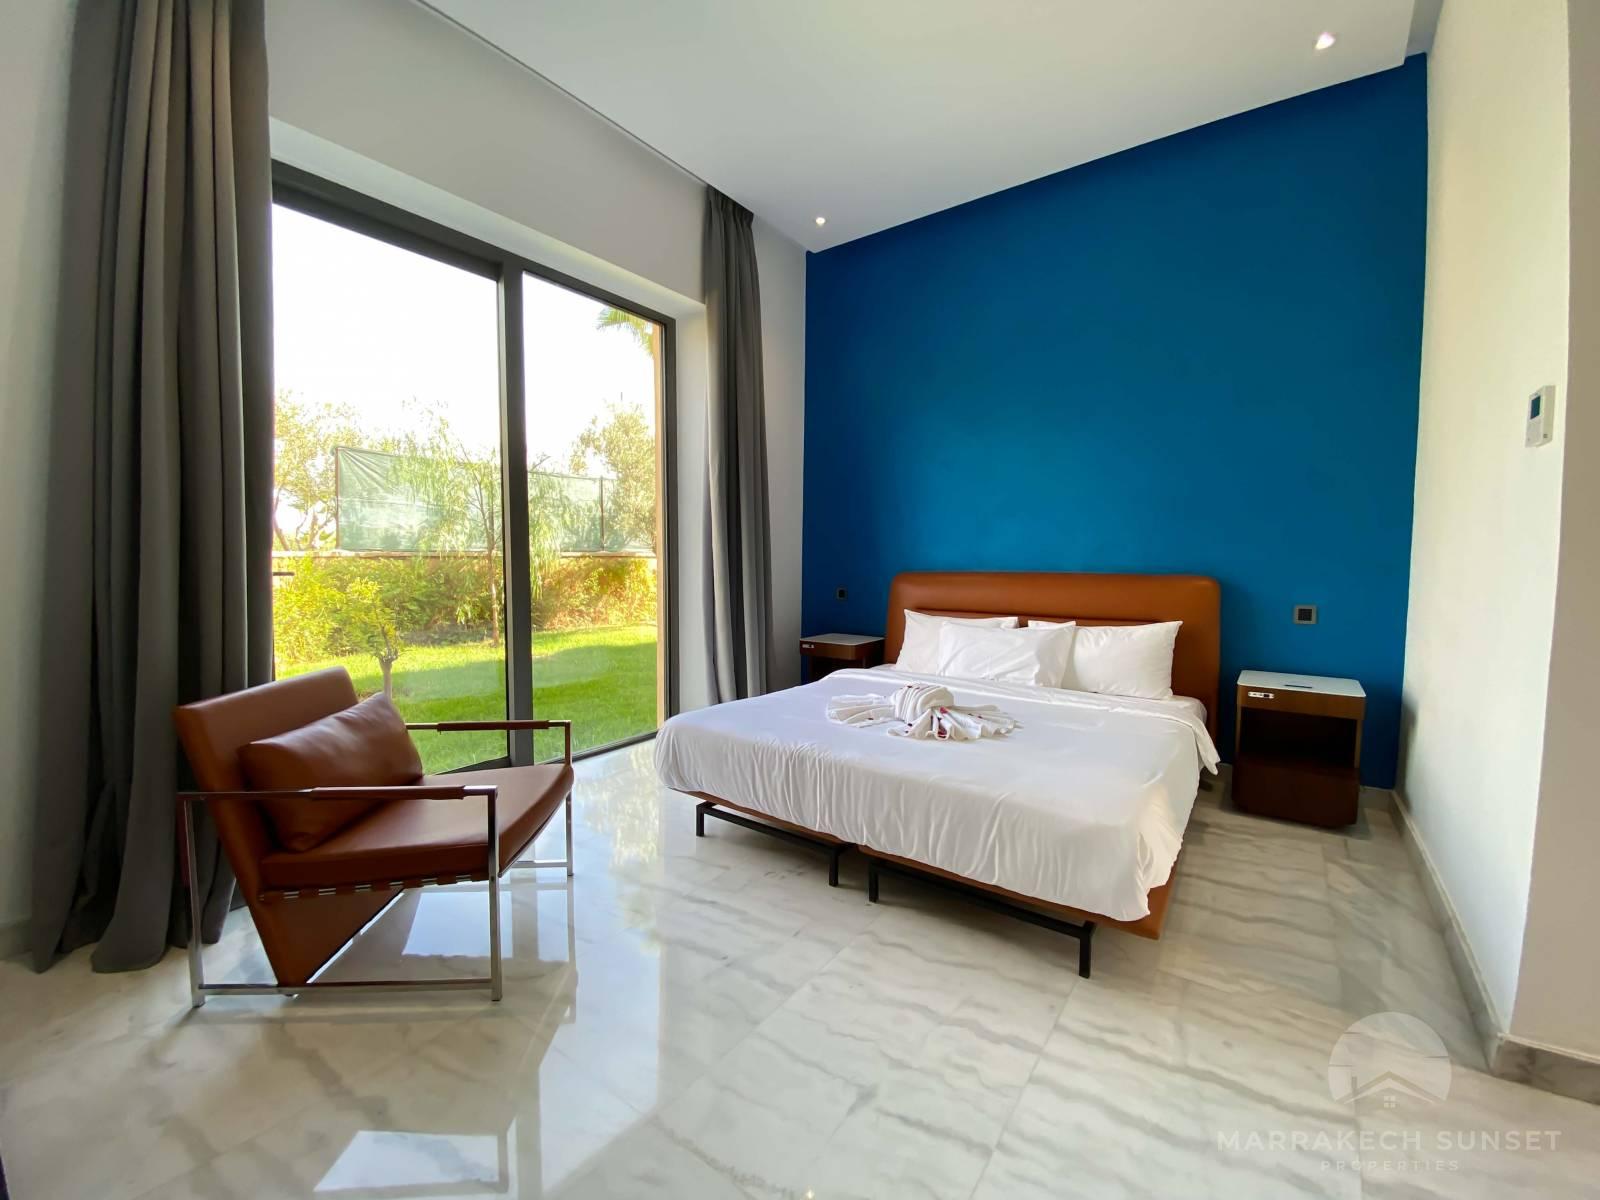 4 bedroom Luxury villa for sale in a private domain Marrakech